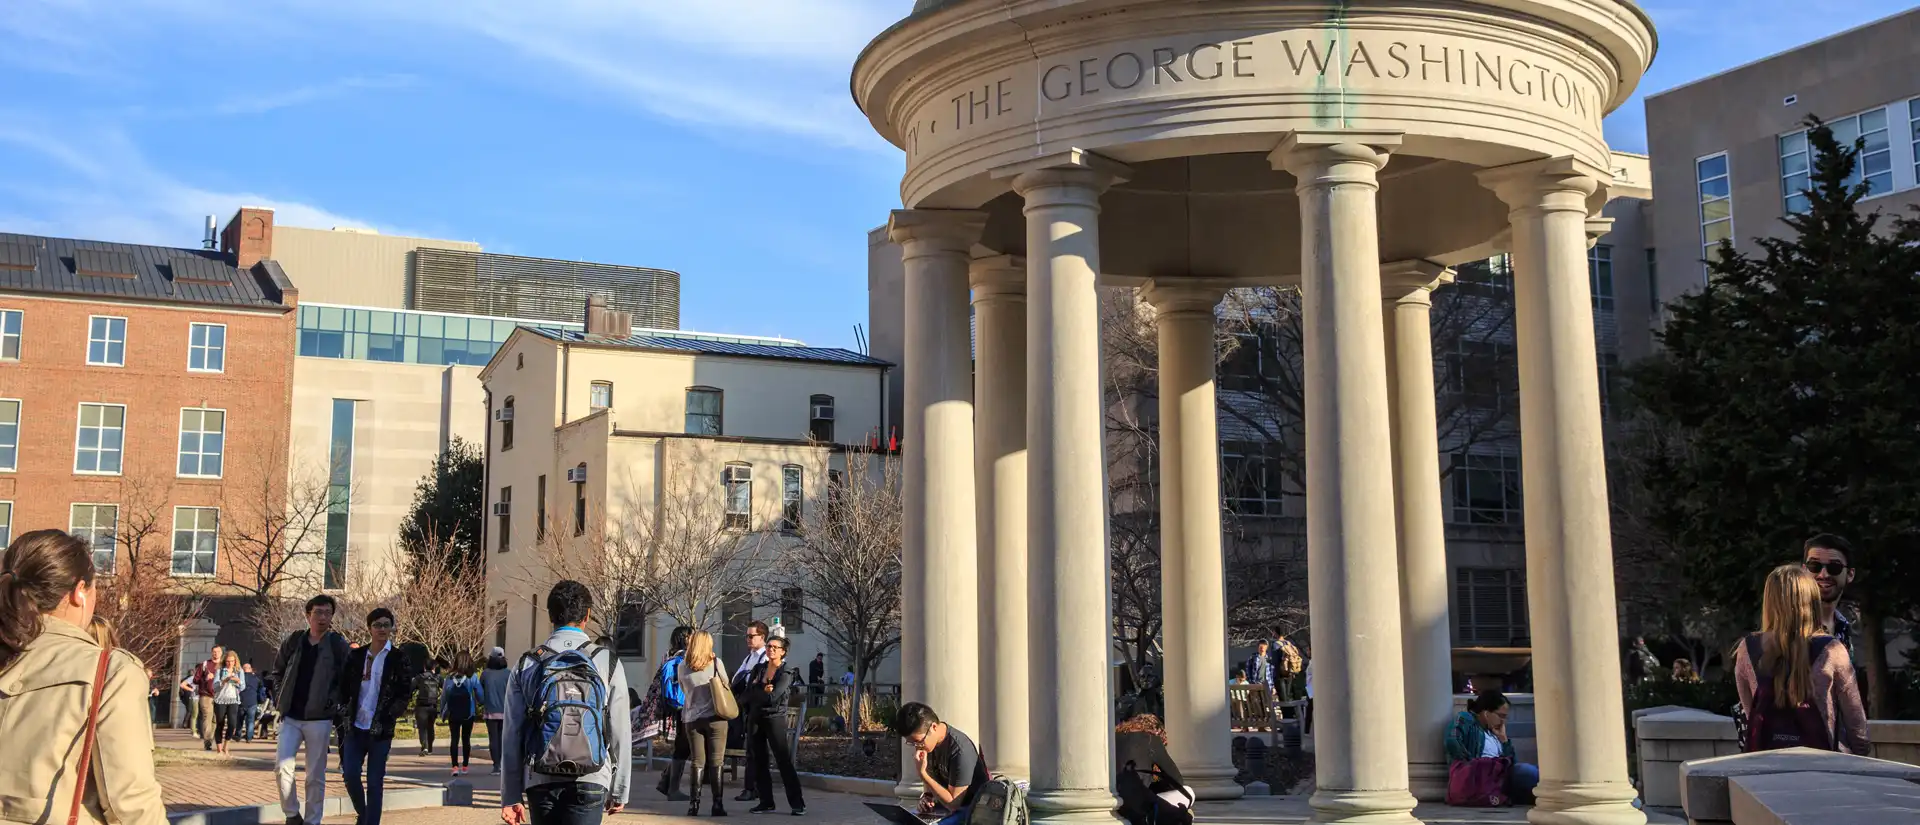 The George Washington University Law School, Washington, DC